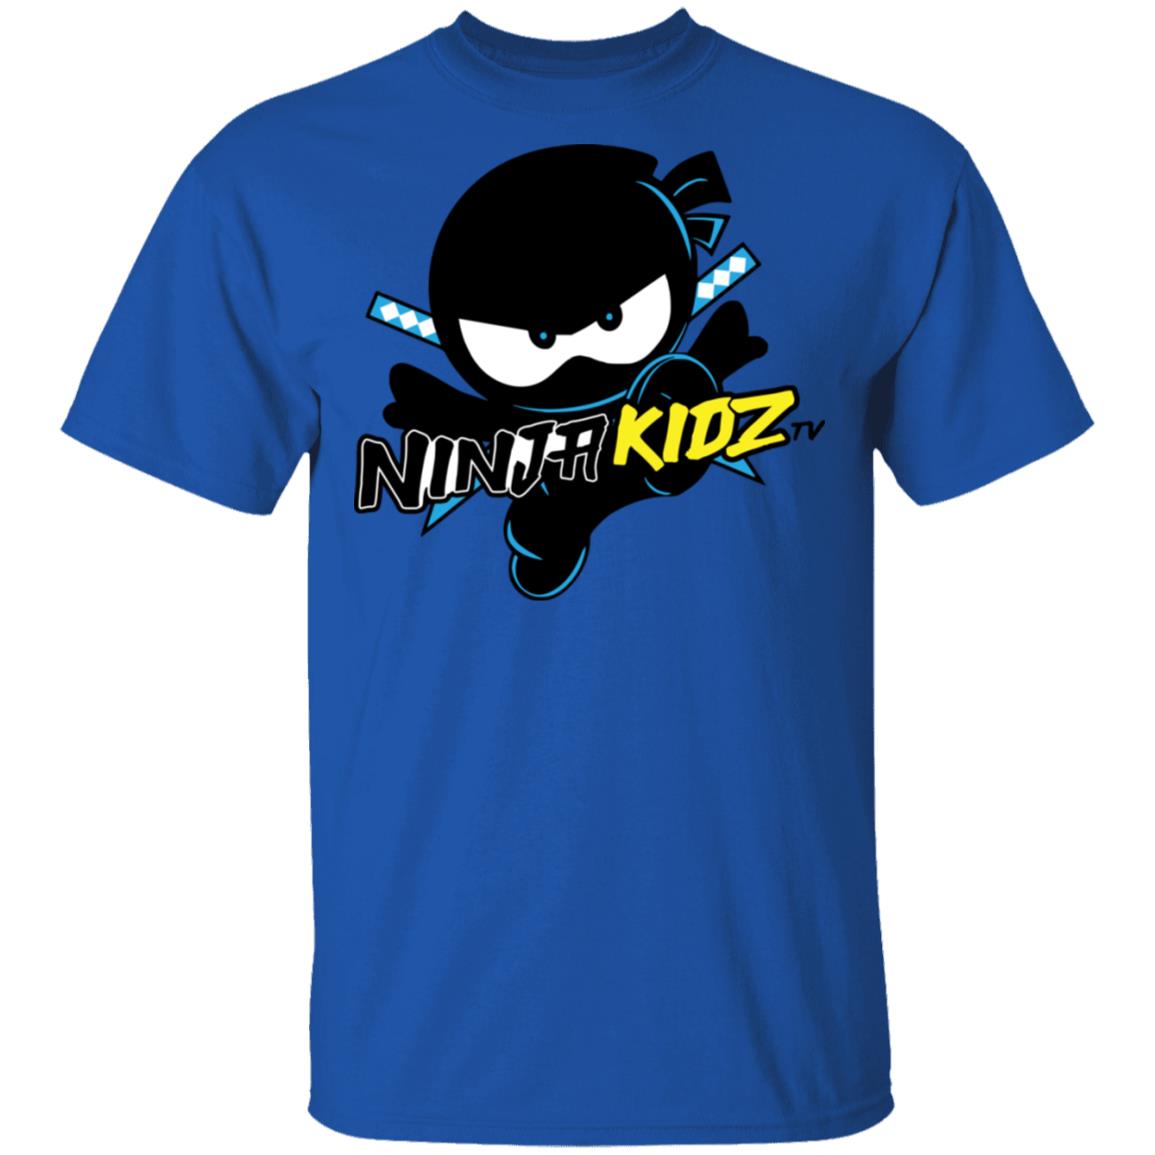  Ninja Kidz Original Logo Tee (Heather Grey, X-Small